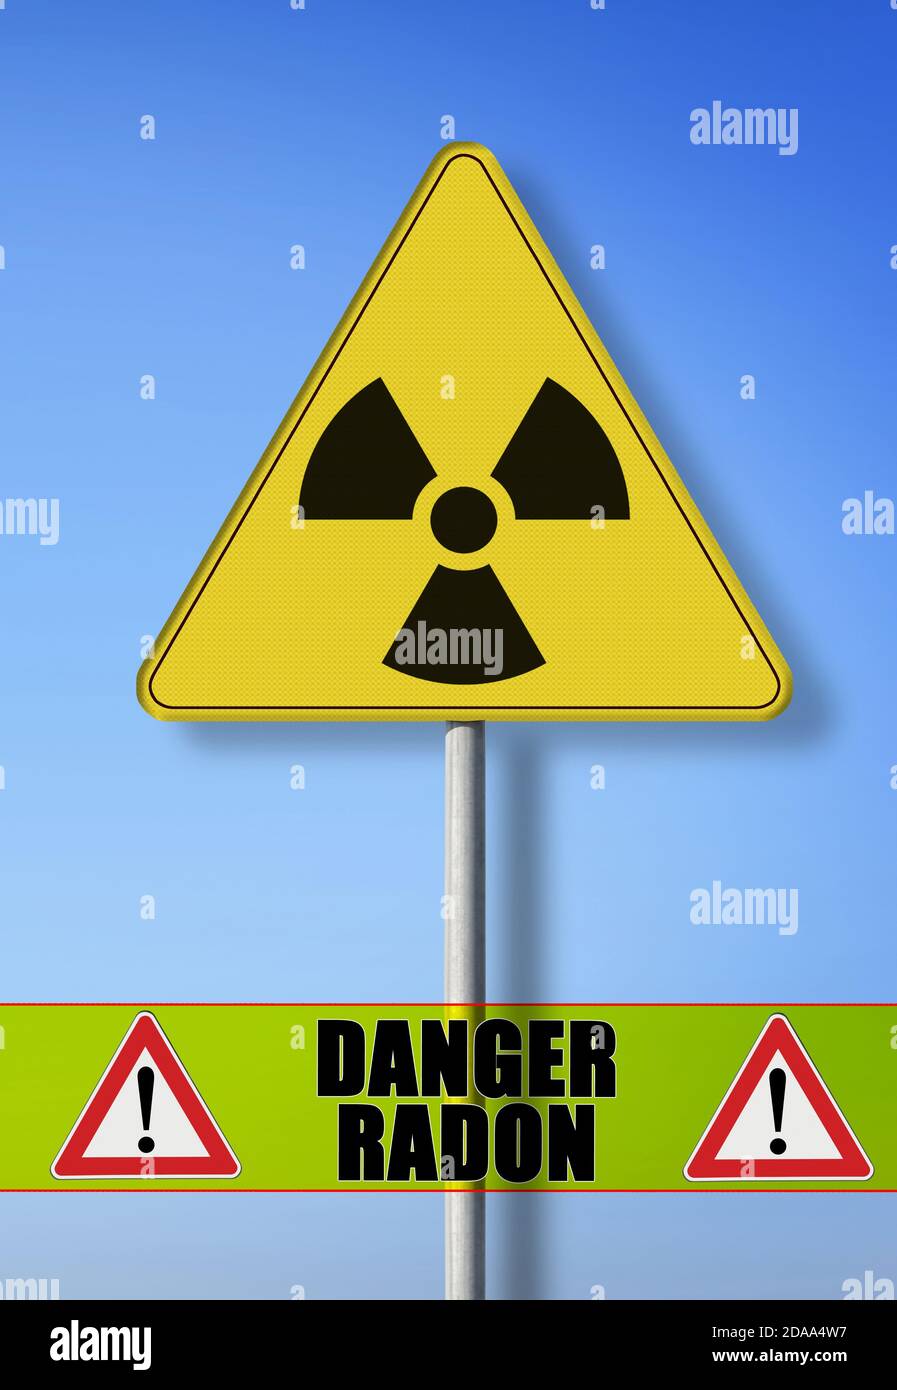 Danger of radioactive contamination from gas radon - concept image Stock Photo